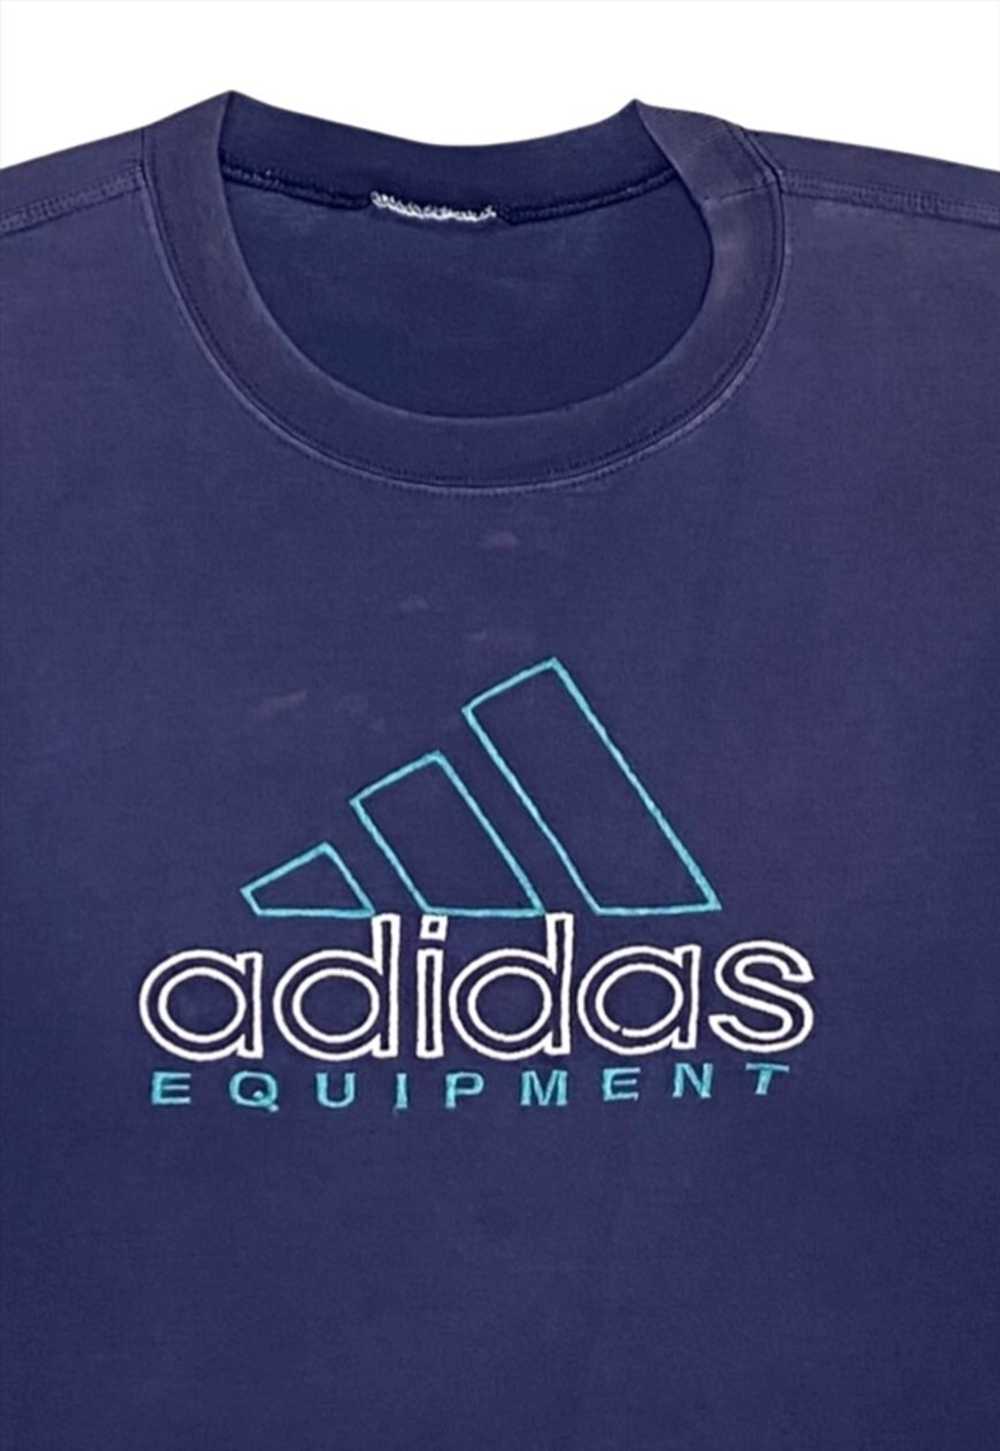 Adidas Equipment Dark Blue T-Shirt XL - image 2